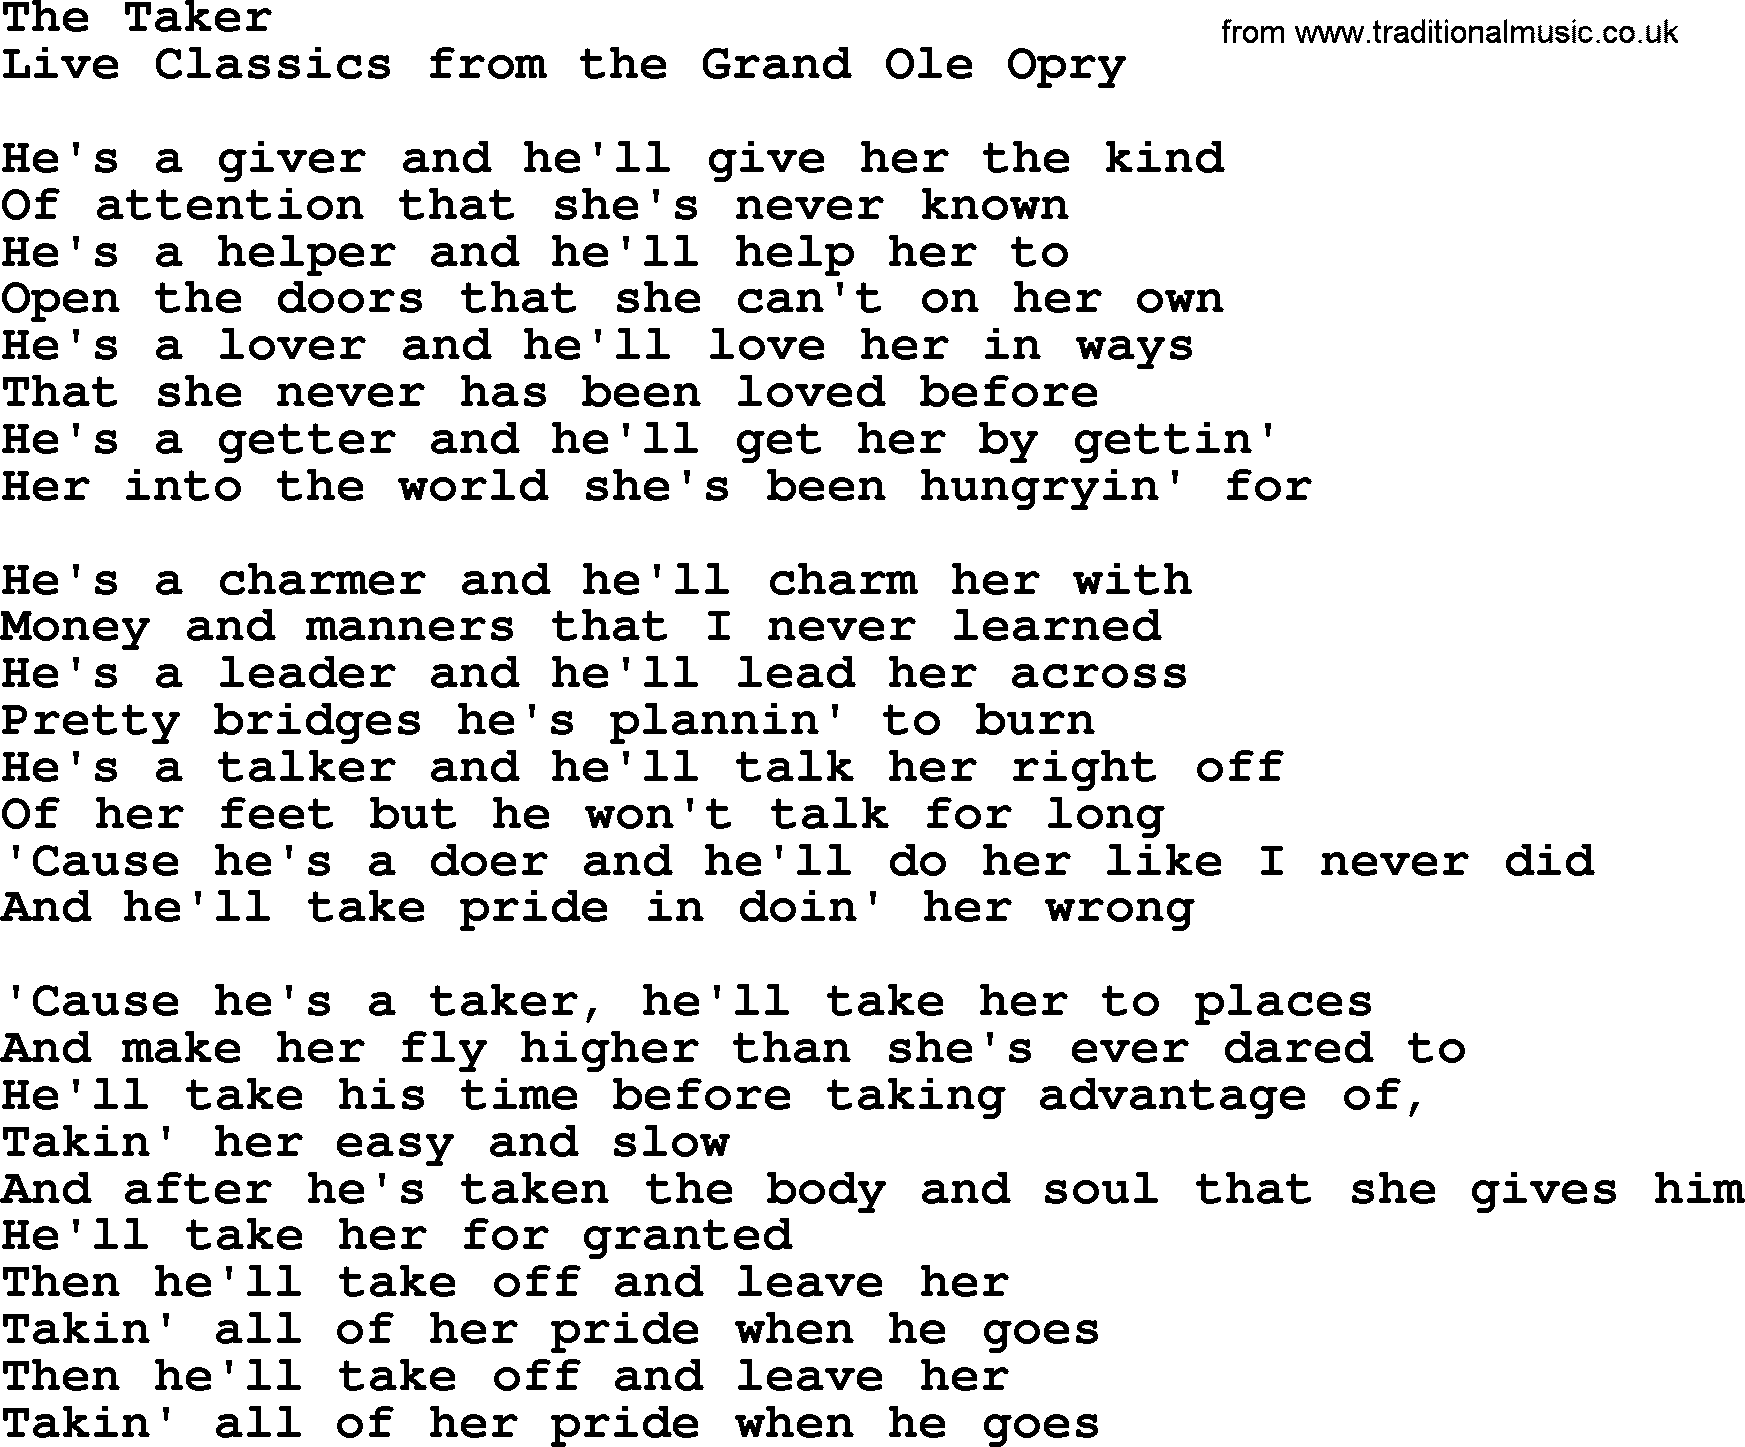 Marty Robbins song: The Taker, lyrics